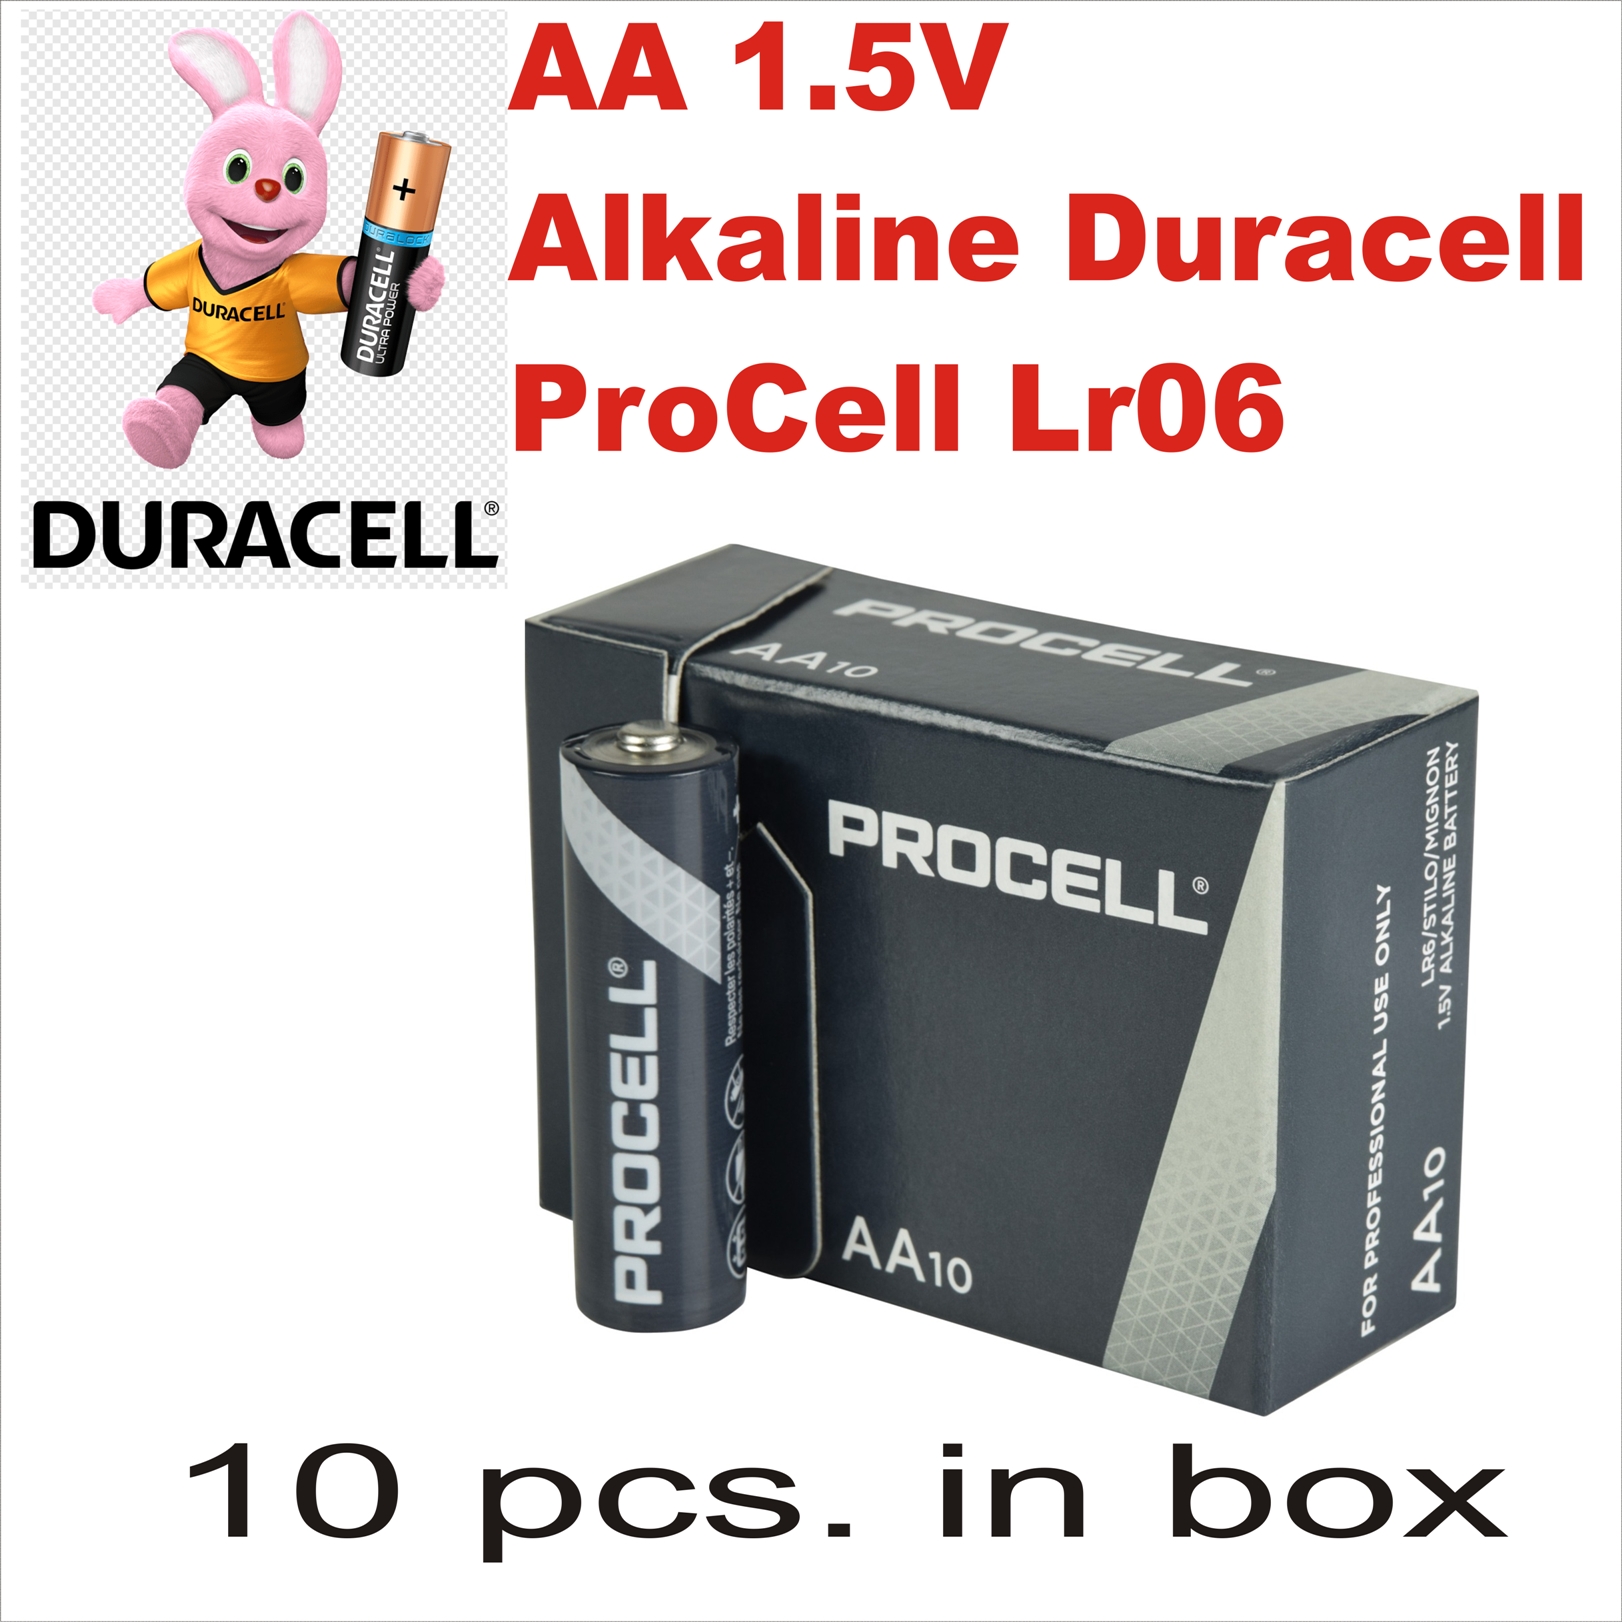 AA 1.5V Alkaline Duracell ProCell LR06 (10бр.)